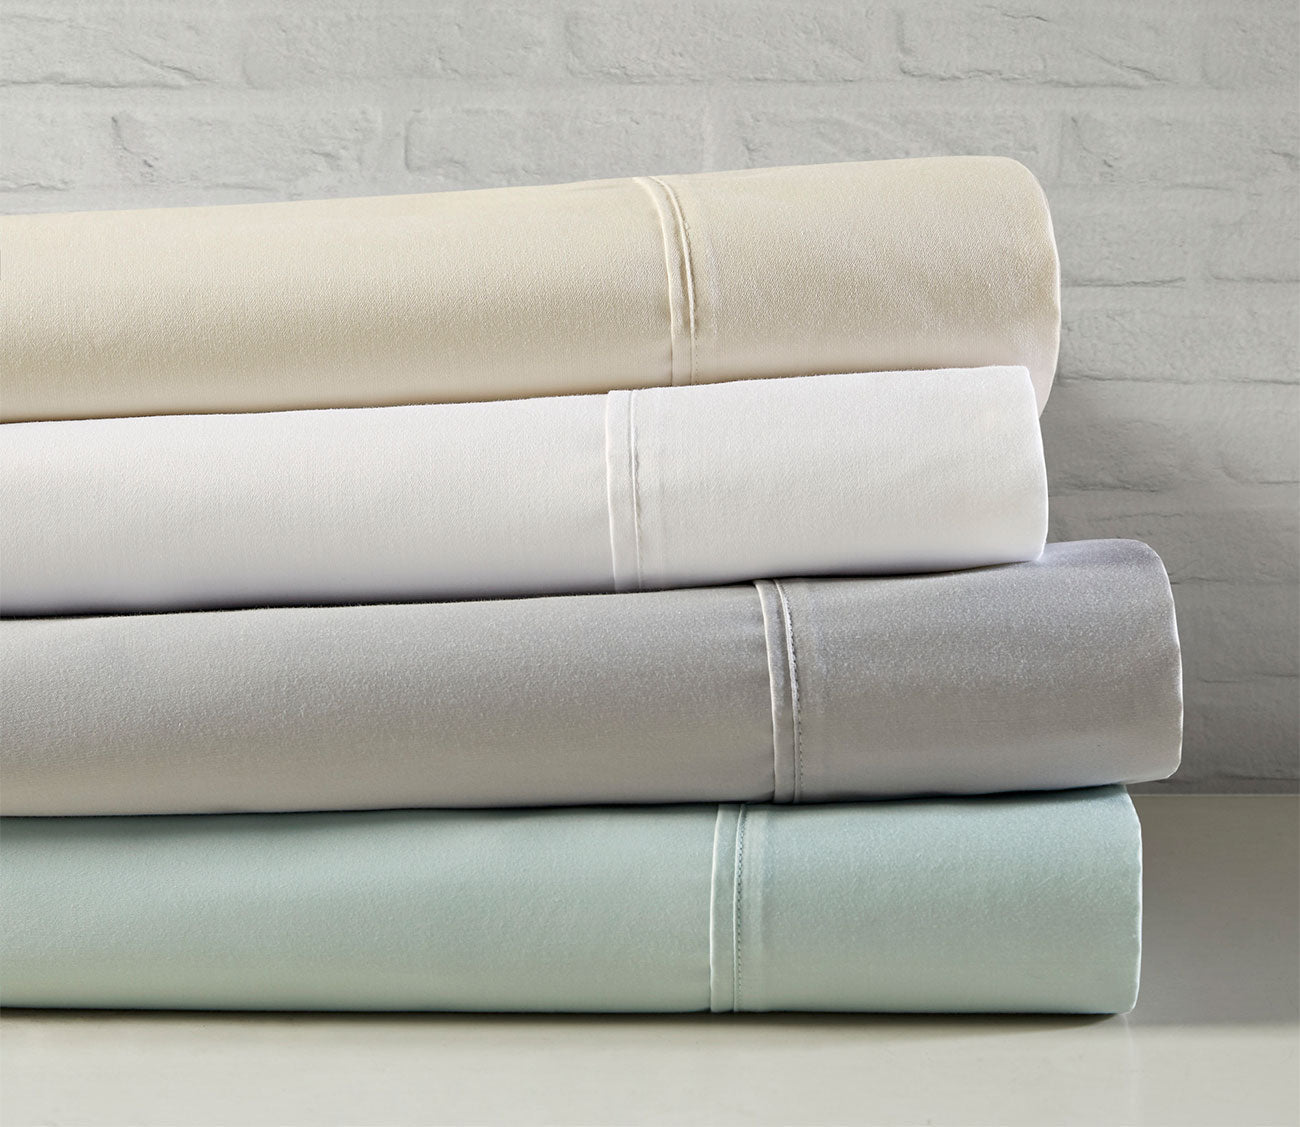 400TC Wrinkle Resistant Cotton Sateen Sheet Set by Beautyrest